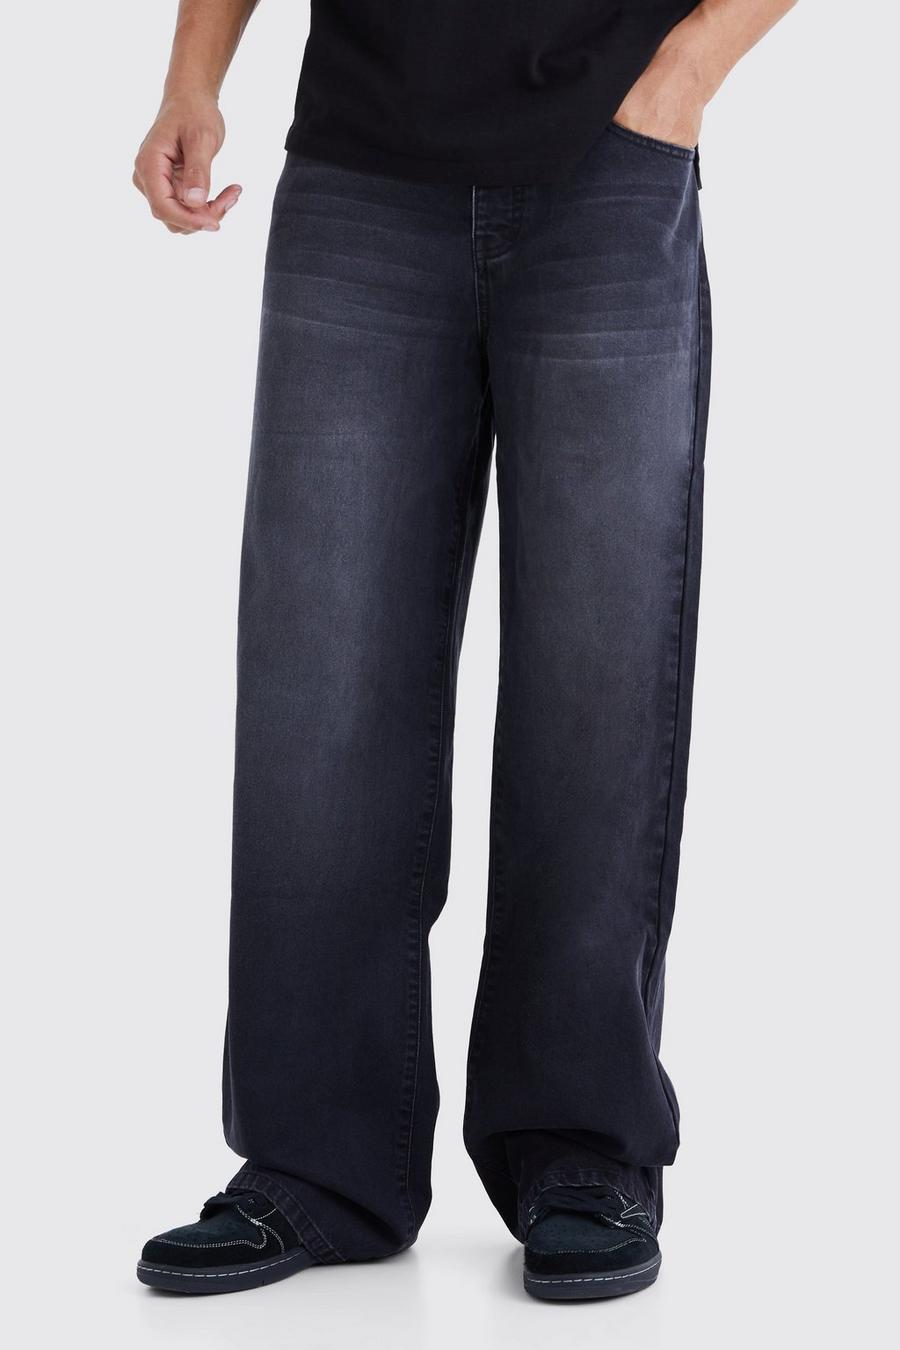 Jeans Tall extra comodi in denim rigido, Washed black